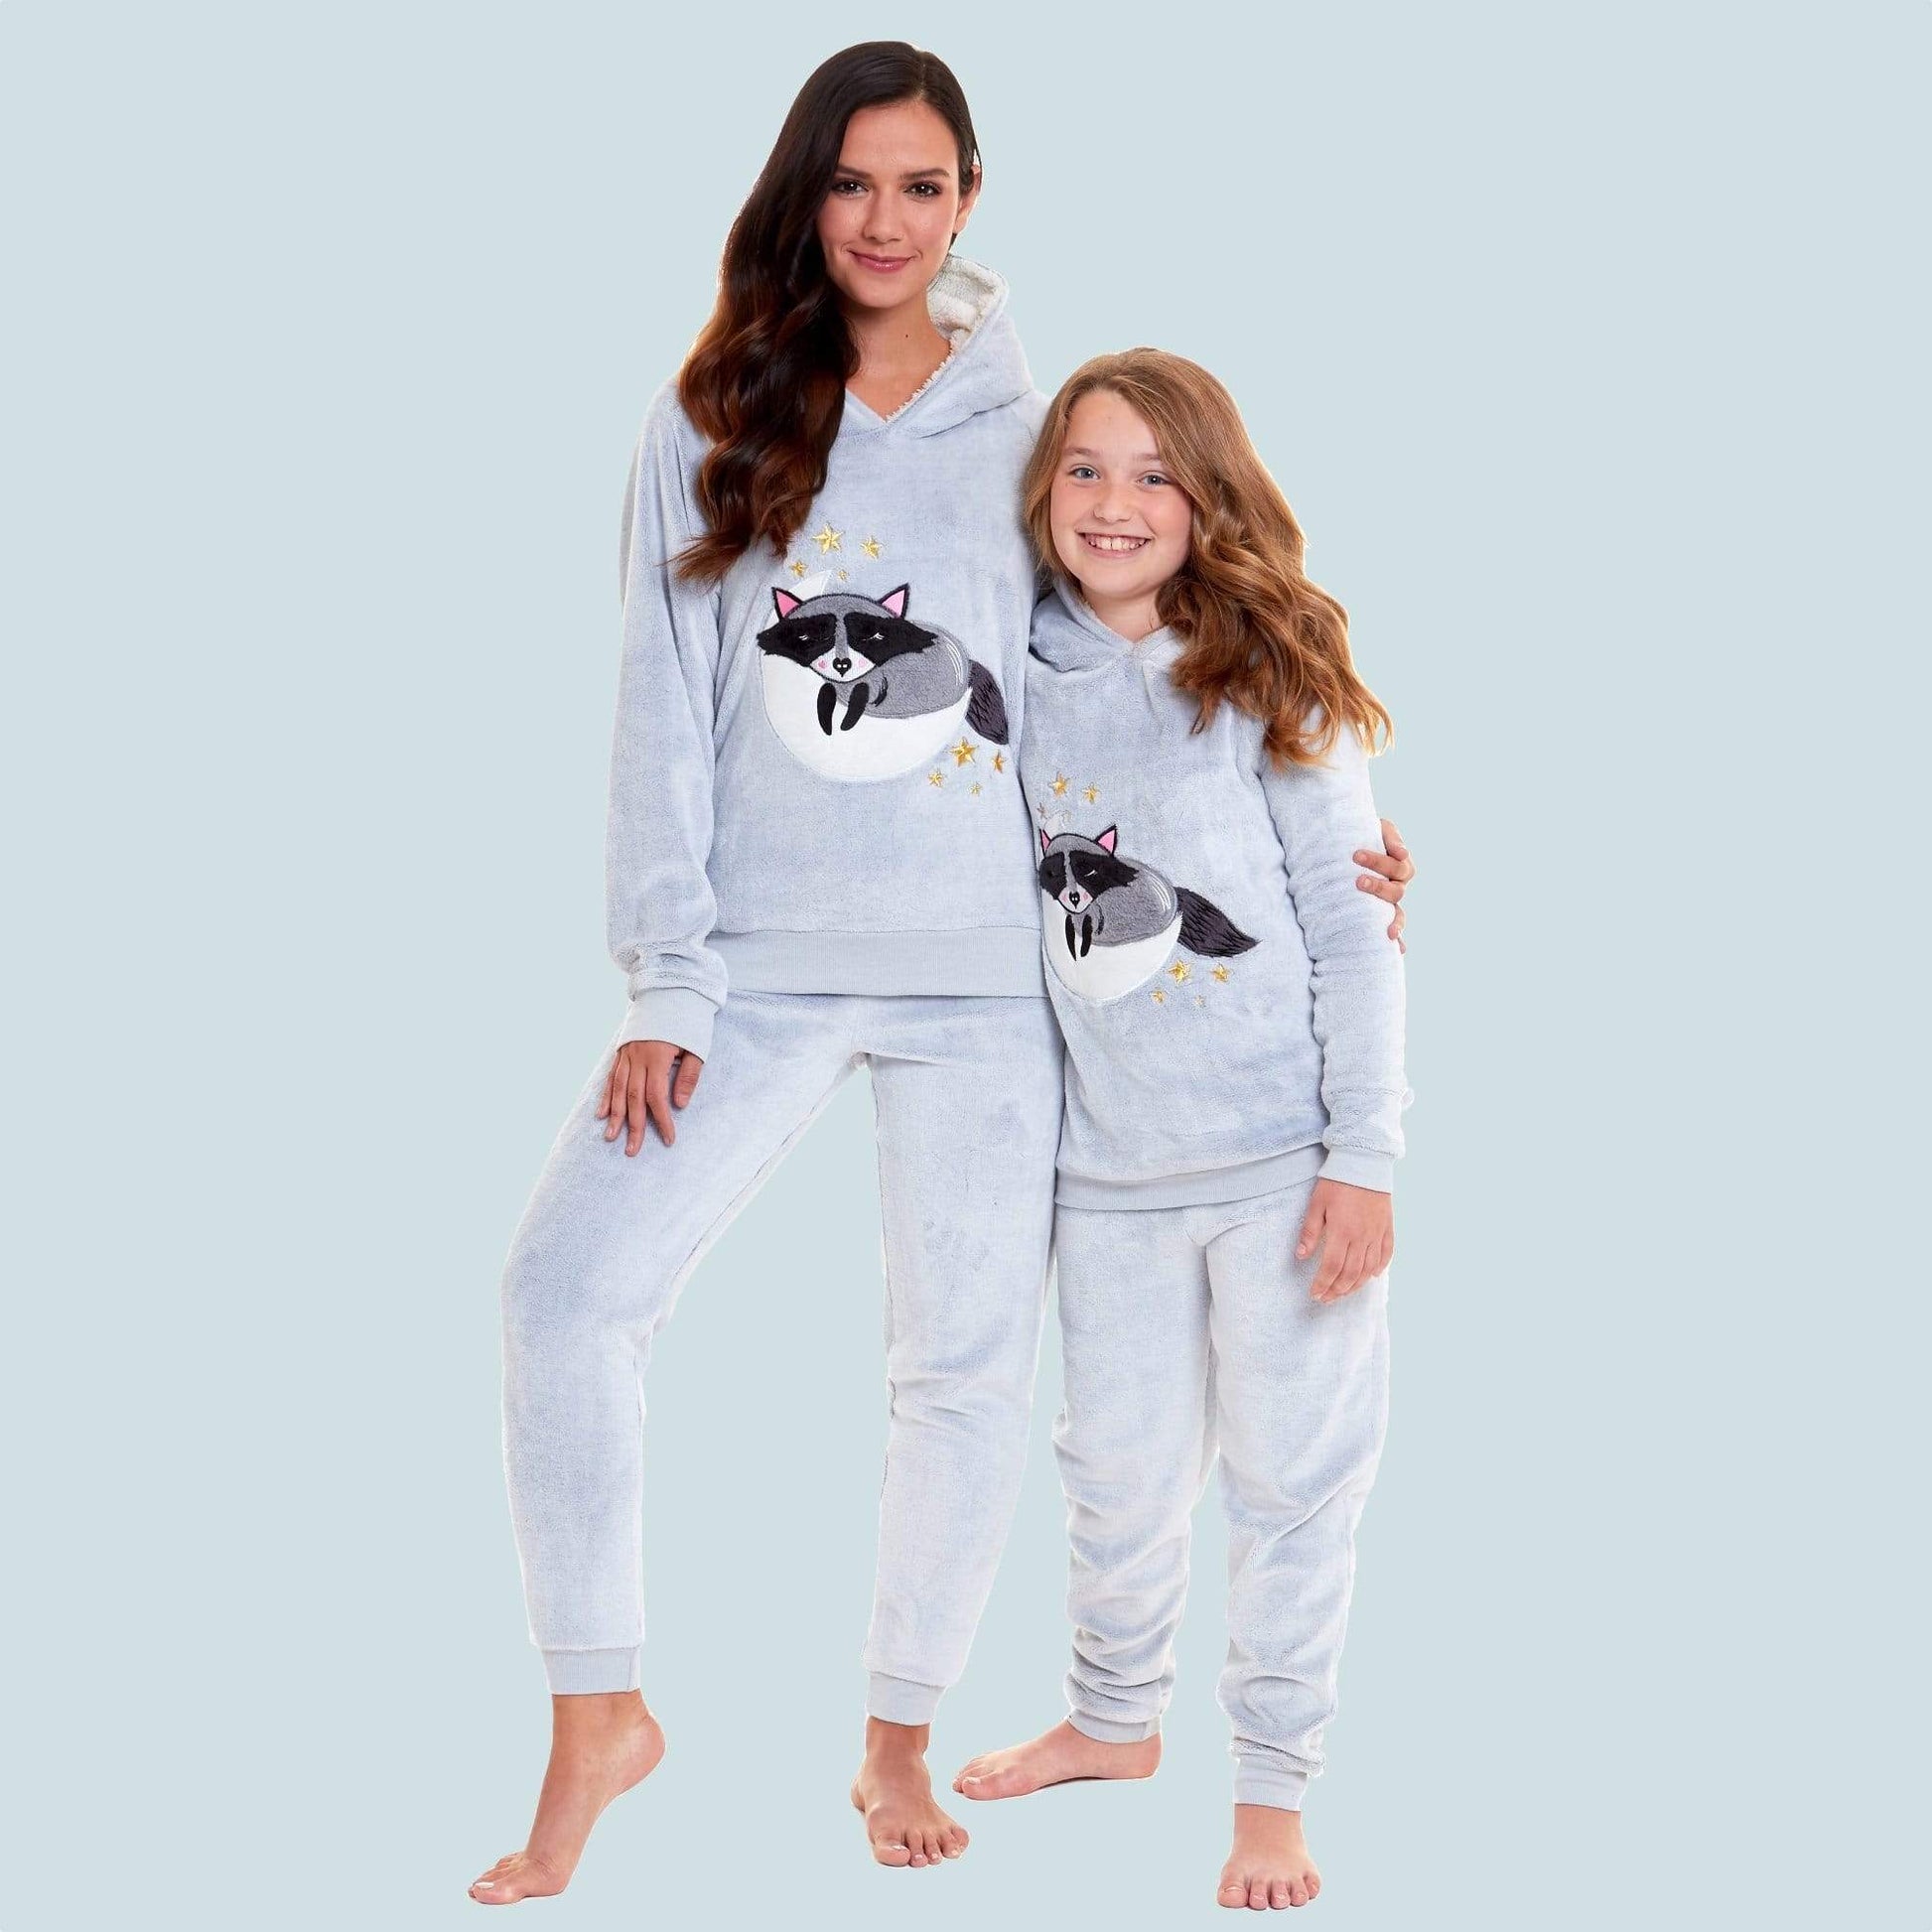 Raccoon Plush Fleece Hooded Pyjama Set, Twosie Pyjama Mother & Daughter Matching Loungewear SMALL | UK 8-10 Daisy Dreamer Pyjamas